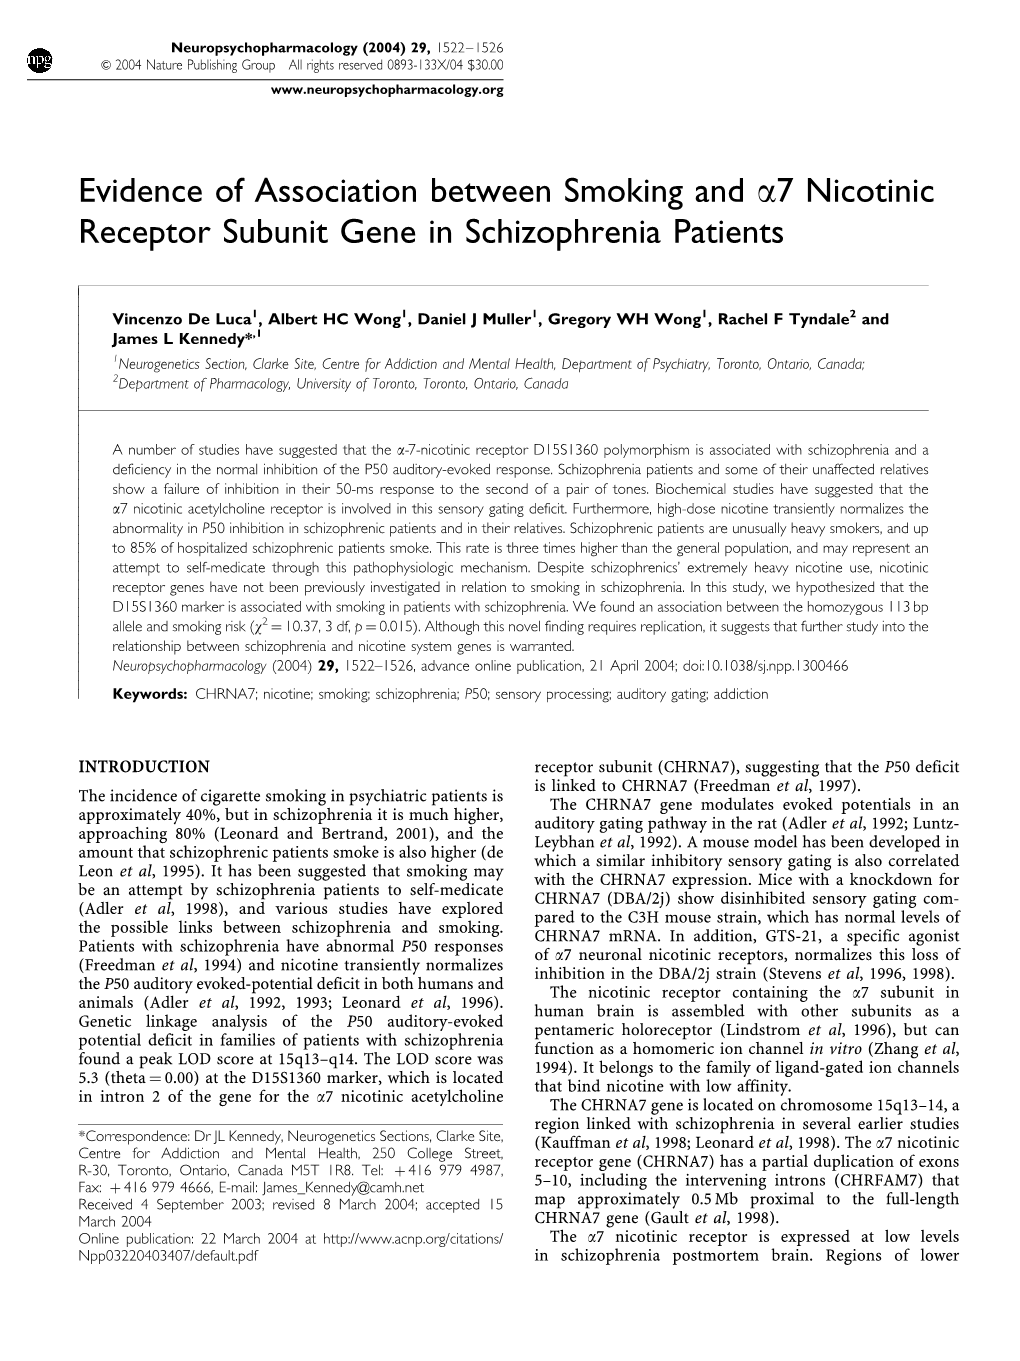 Evidence of Association Between Smoking and Α7 Nicotinic Receptor Subunit Gene in Schizophrenia Patients